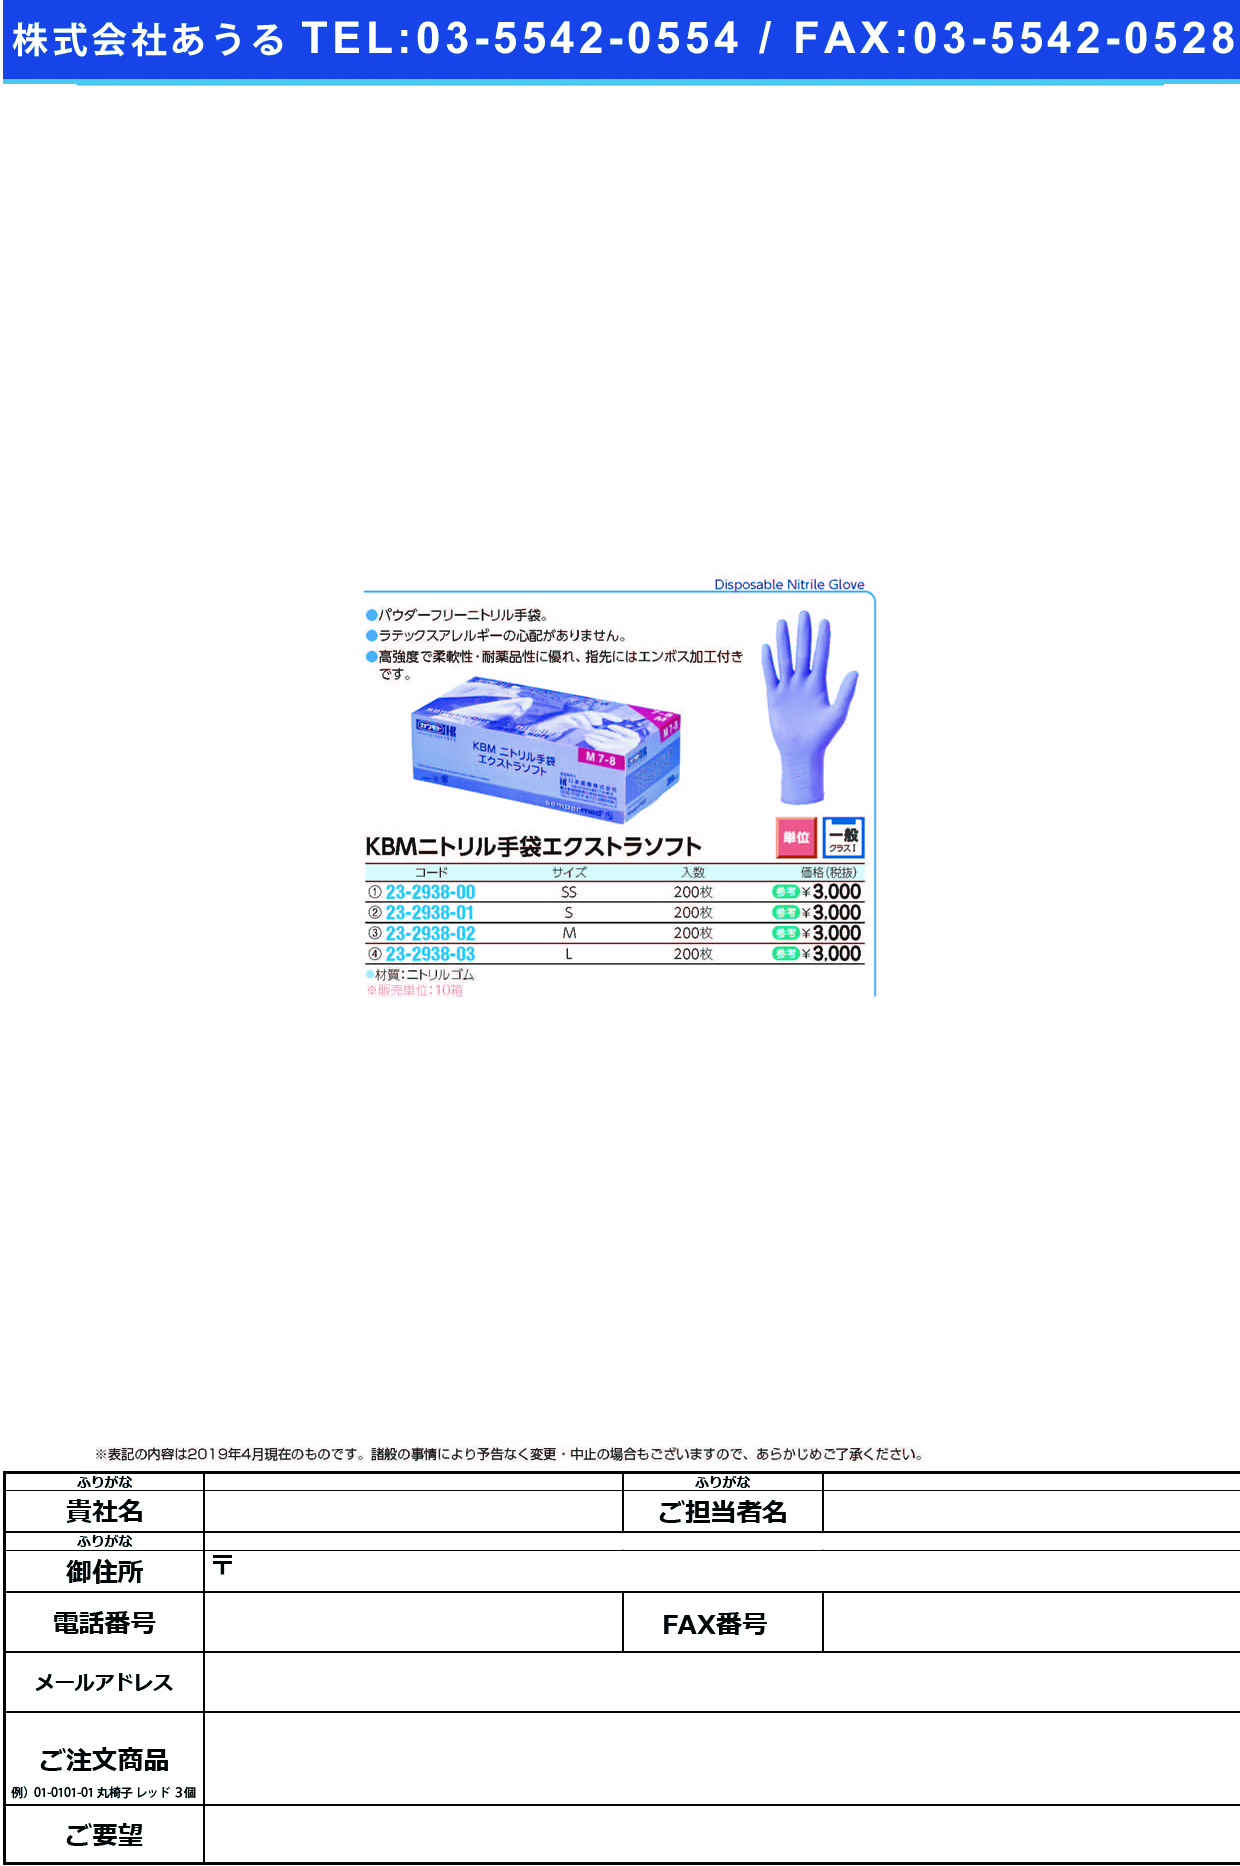 (23-2938-01)ＫＢＭニトリル手袋エクストラソフト S(200ﾏｲｲﾘ) KBMﾆﾄﾘﾙﾃﾌﾞｸﾛｴｸｽﾄﾗｿﾌﾄ(川本産業)【10箱単位】【2019年カタログ商品】